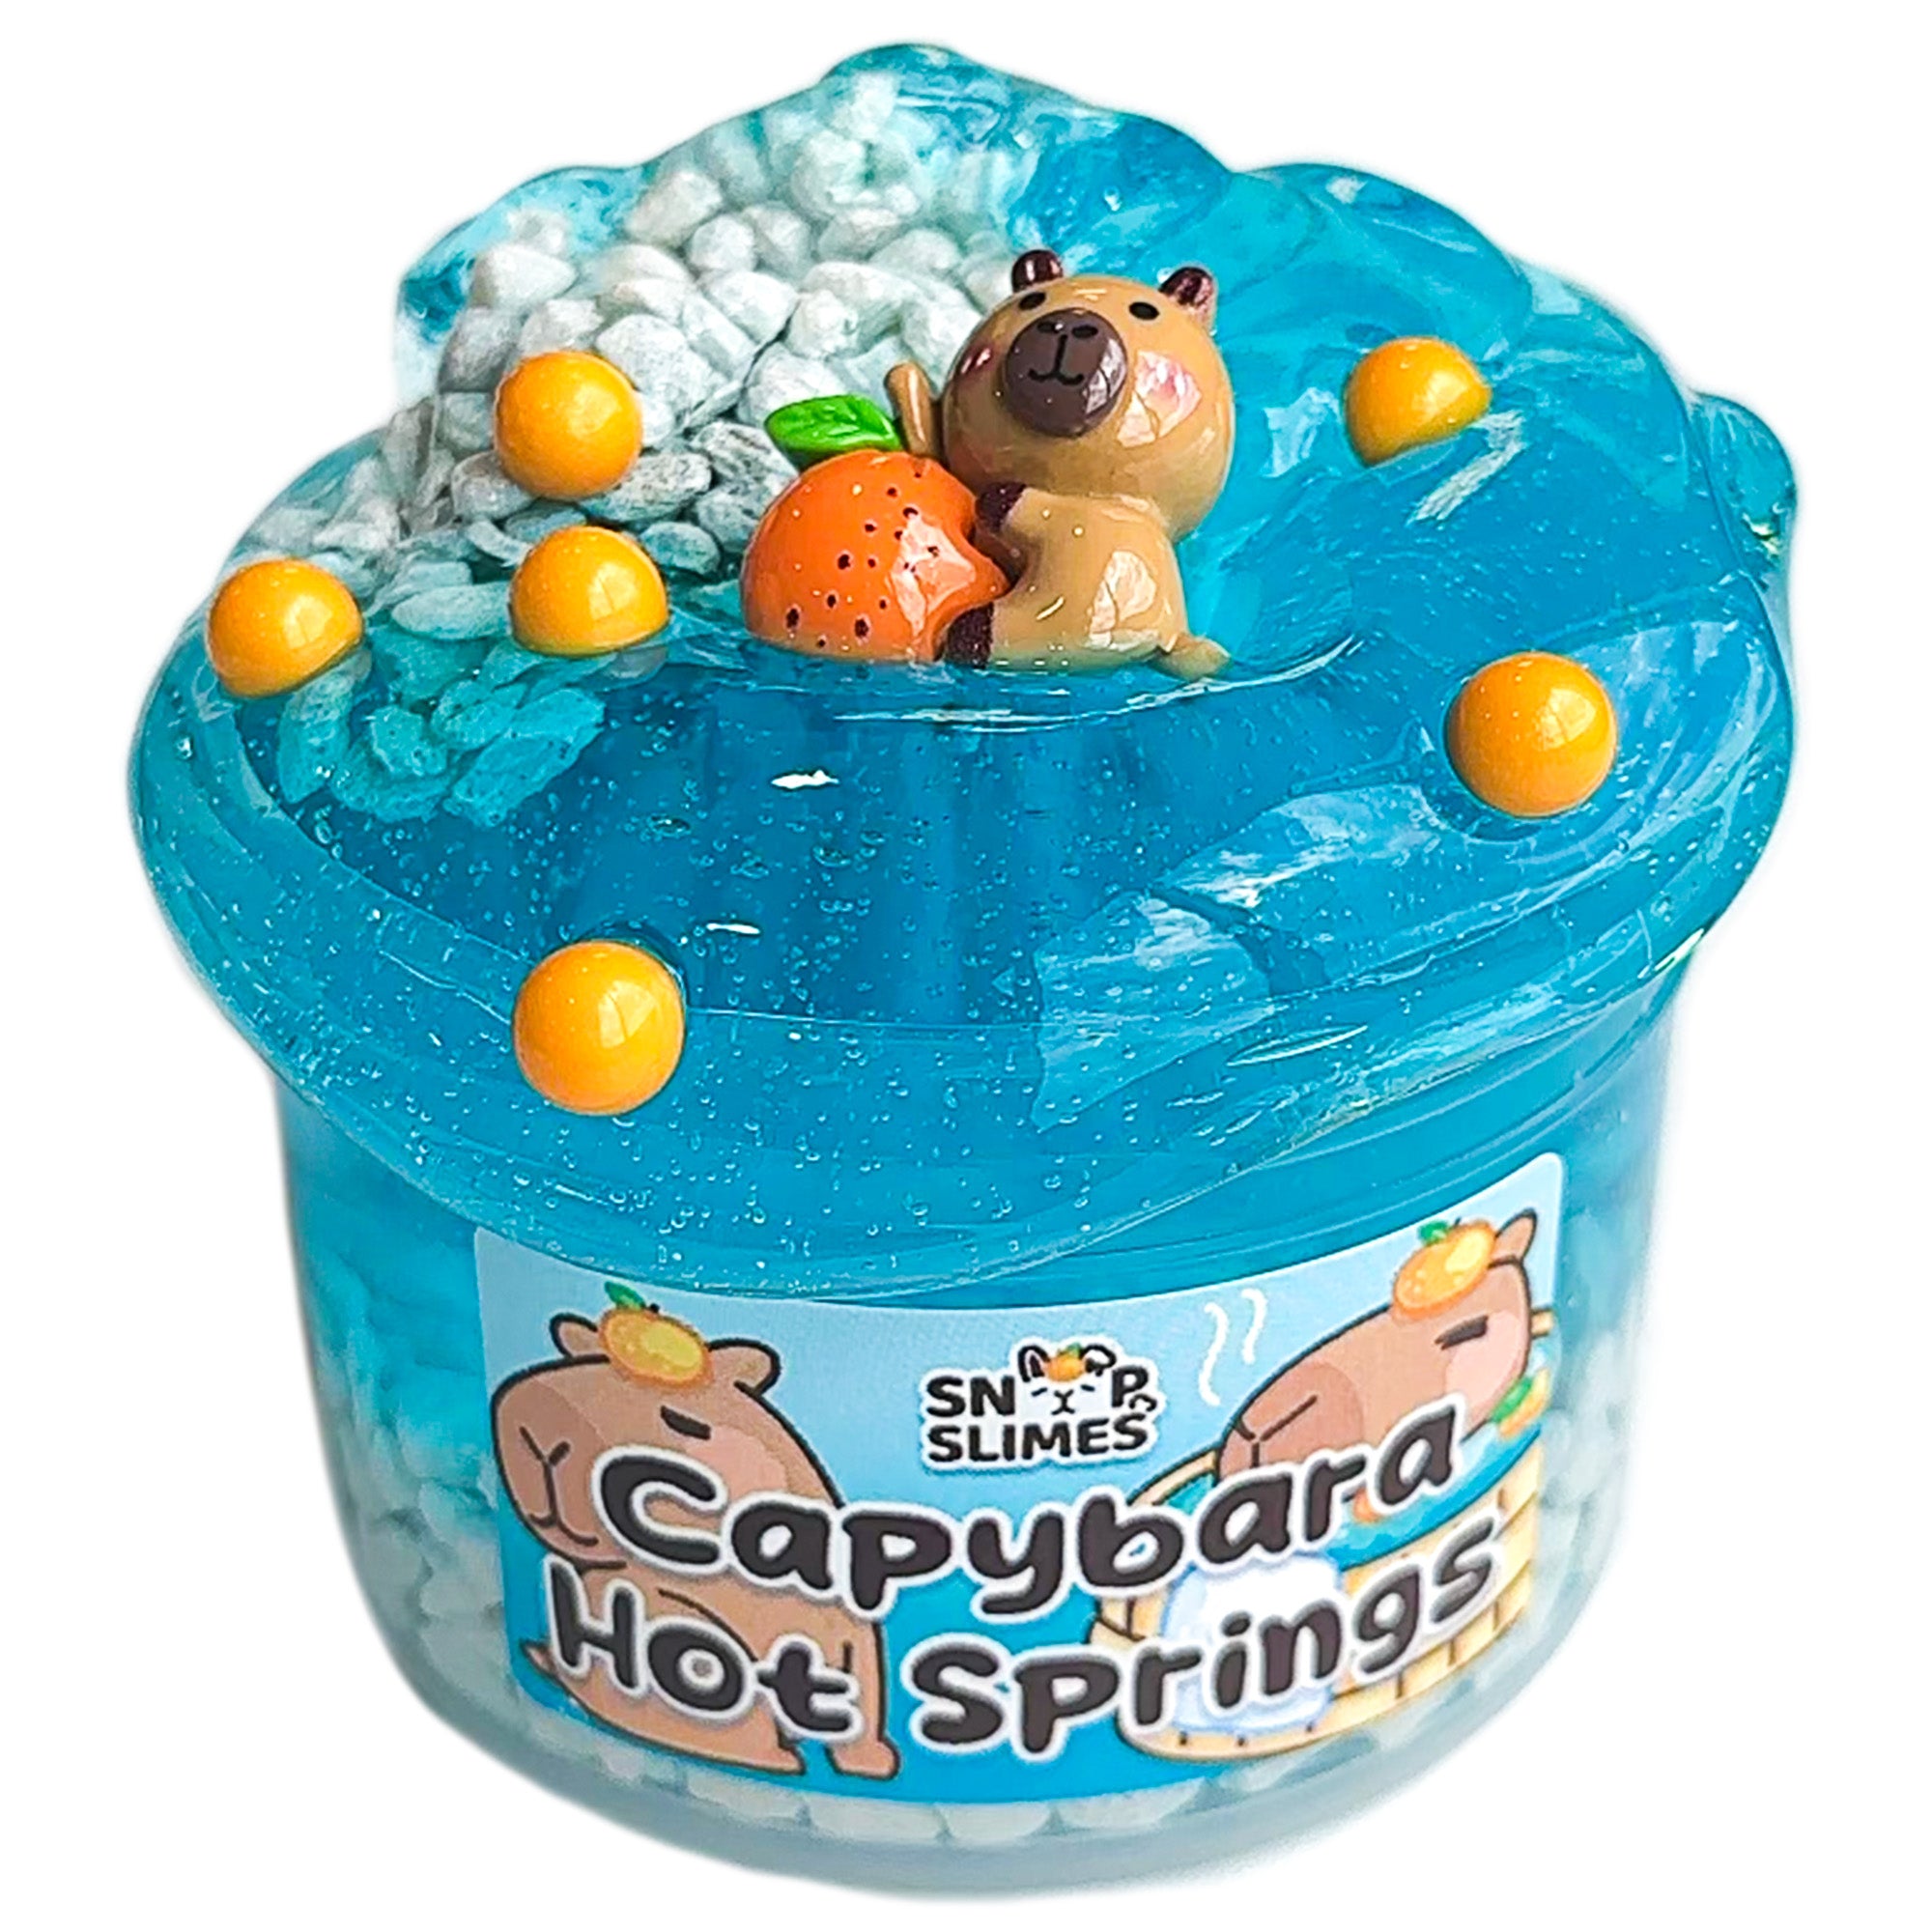 Capybara Hot Springs Slime